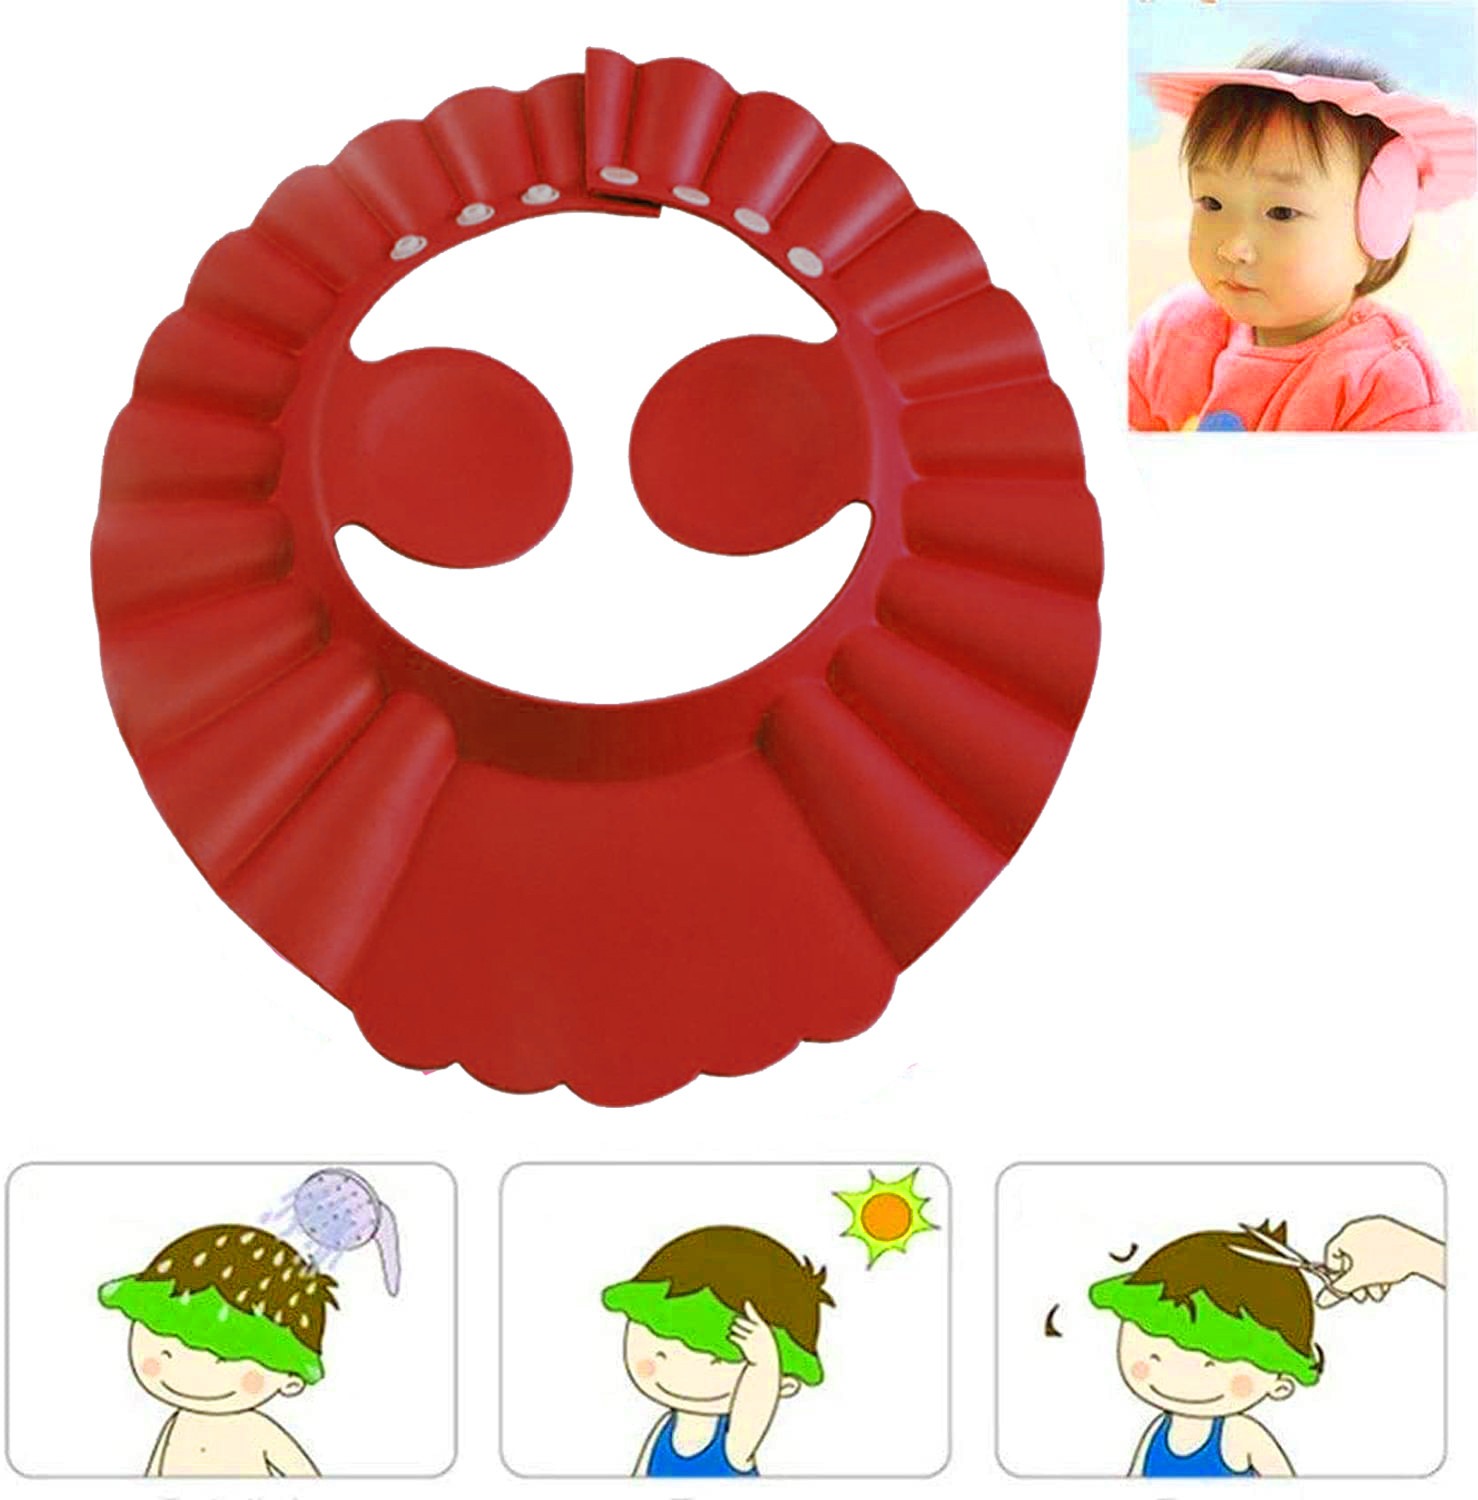 Kuber Industries Rubber Kids Adjustable Shower Cap For Wash Hair (Maroon) 54KM4196